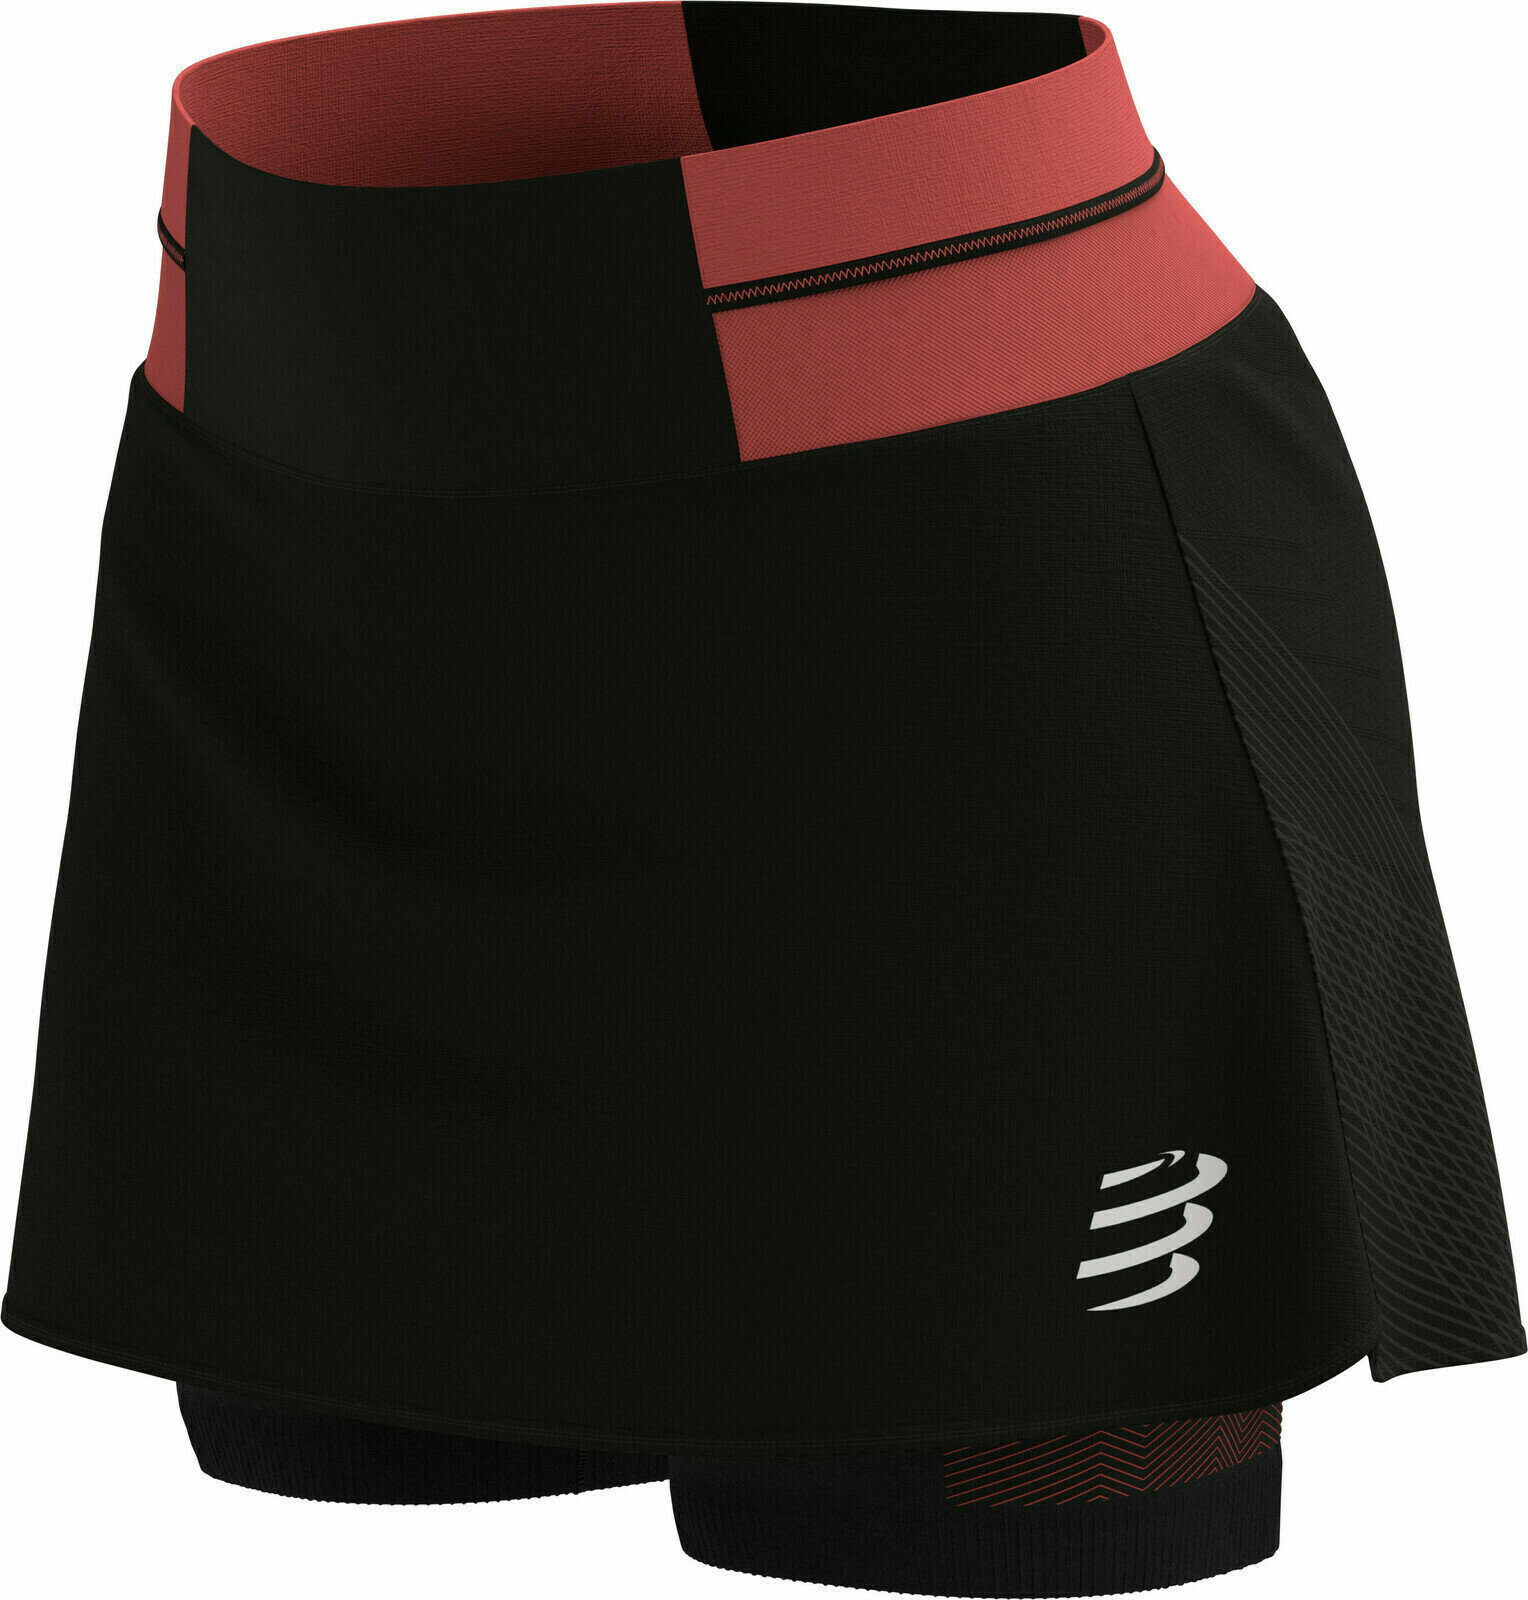 Løbeshorts Compressport Performance Skirt Black/Coral M Løbeshorts